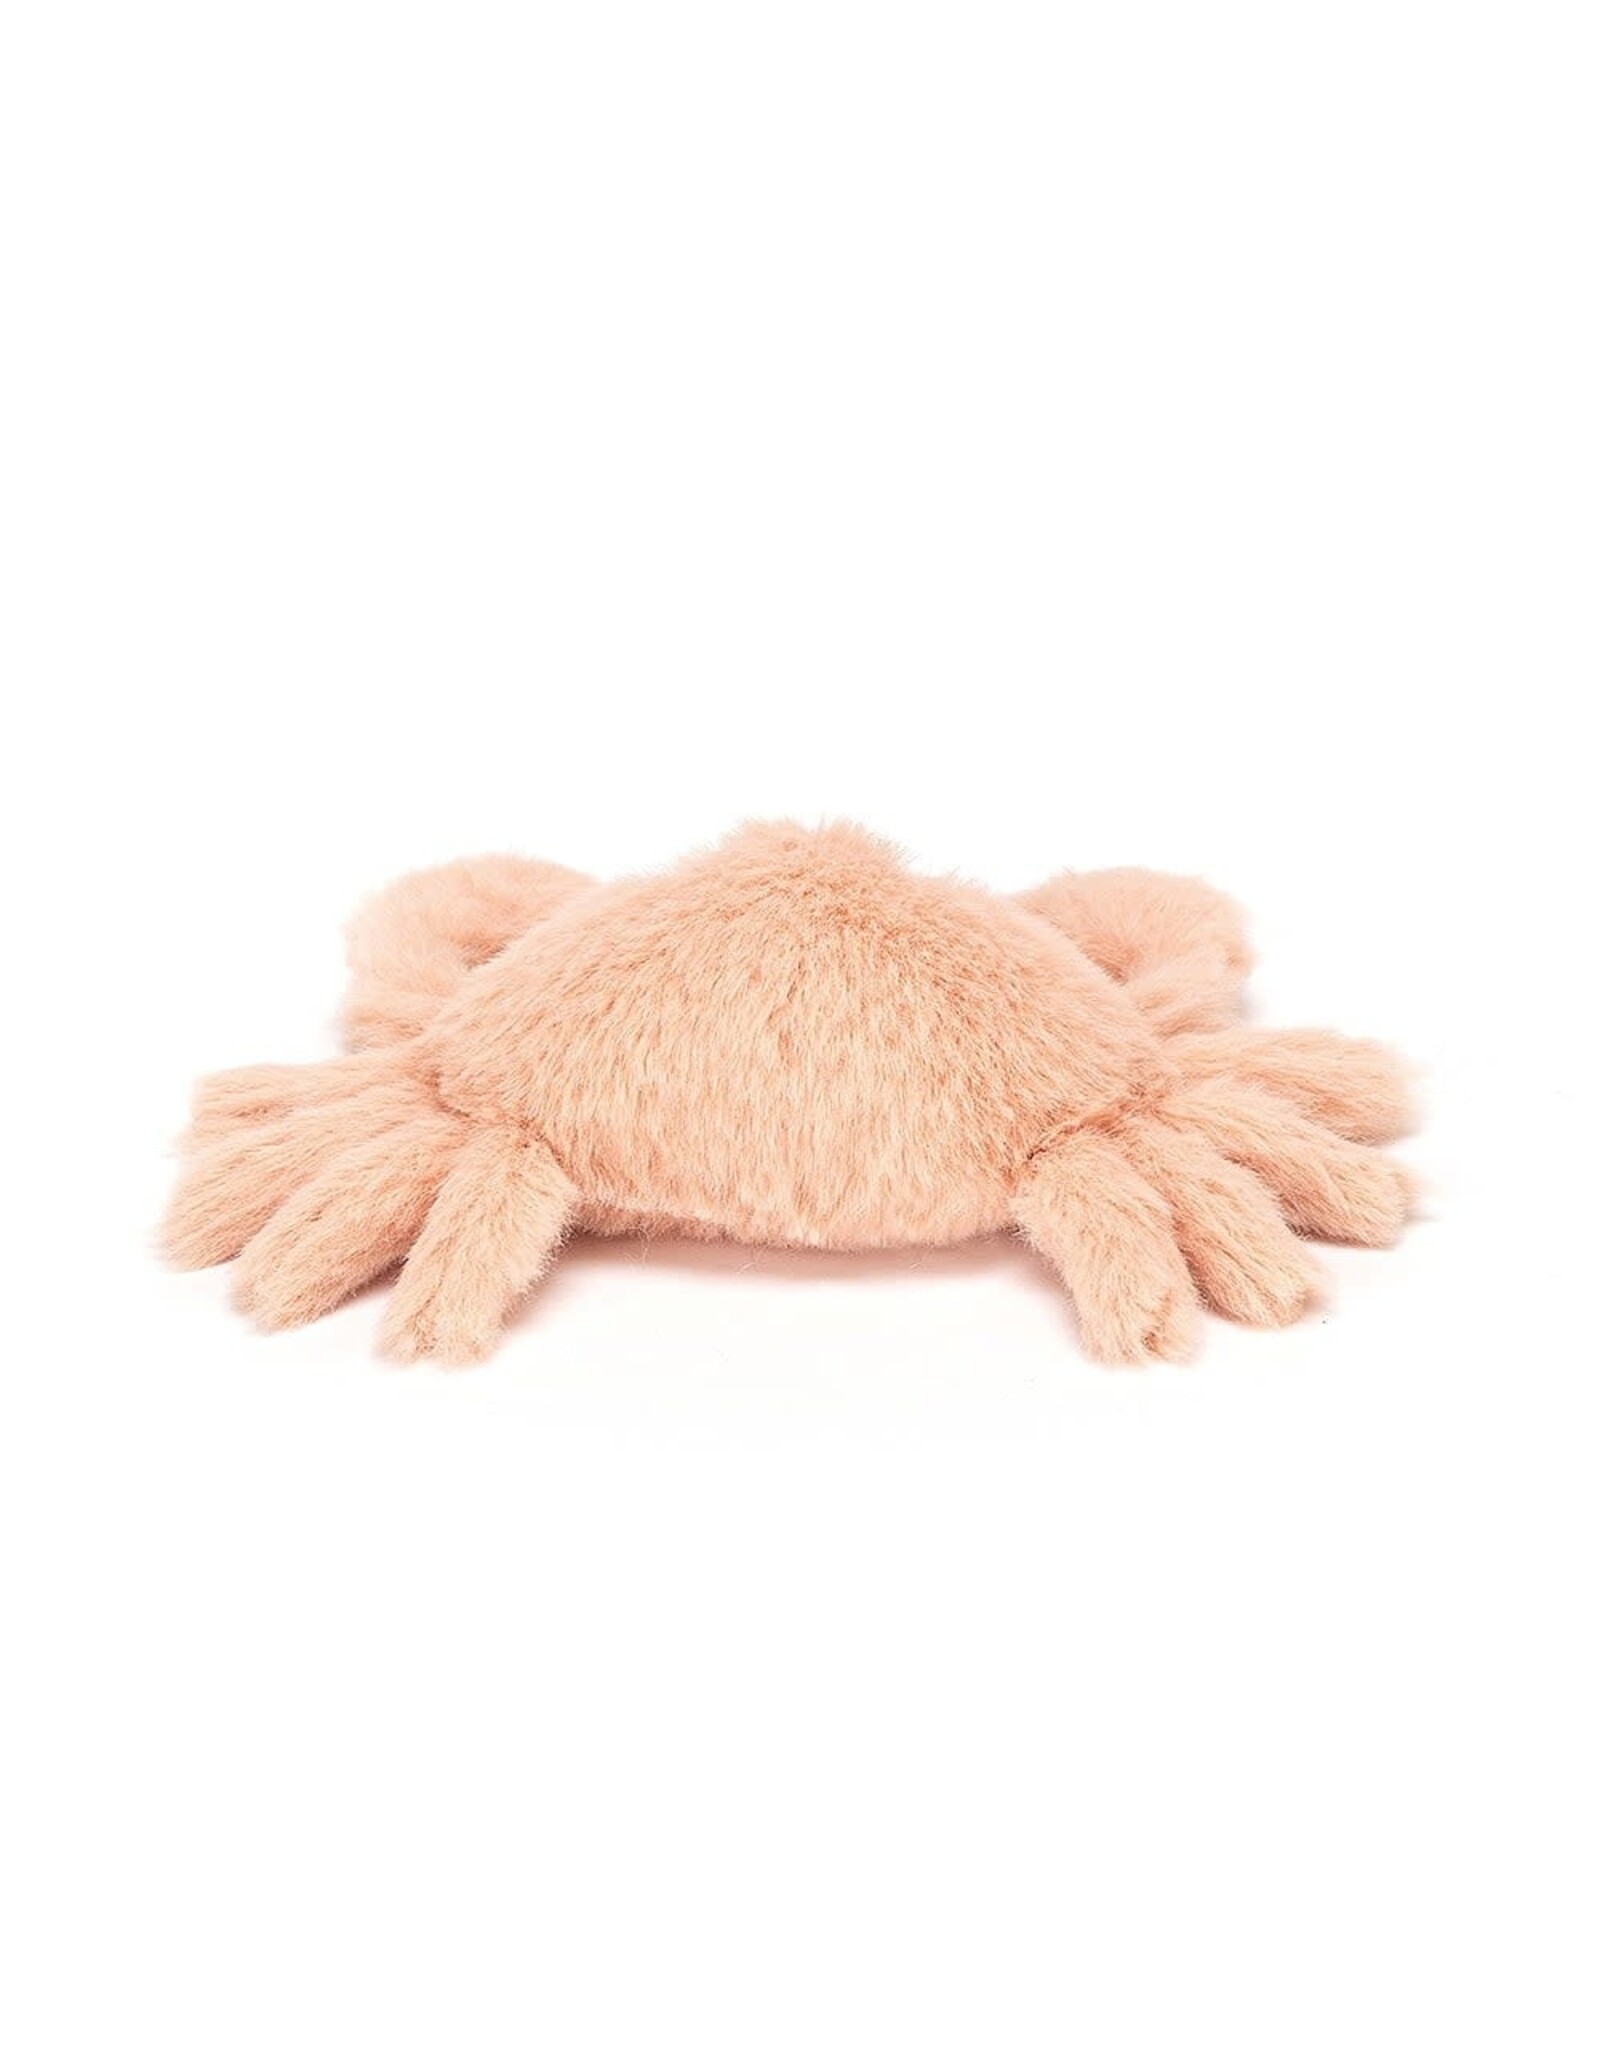 Jellycat Knuffel - Fluffy Crab